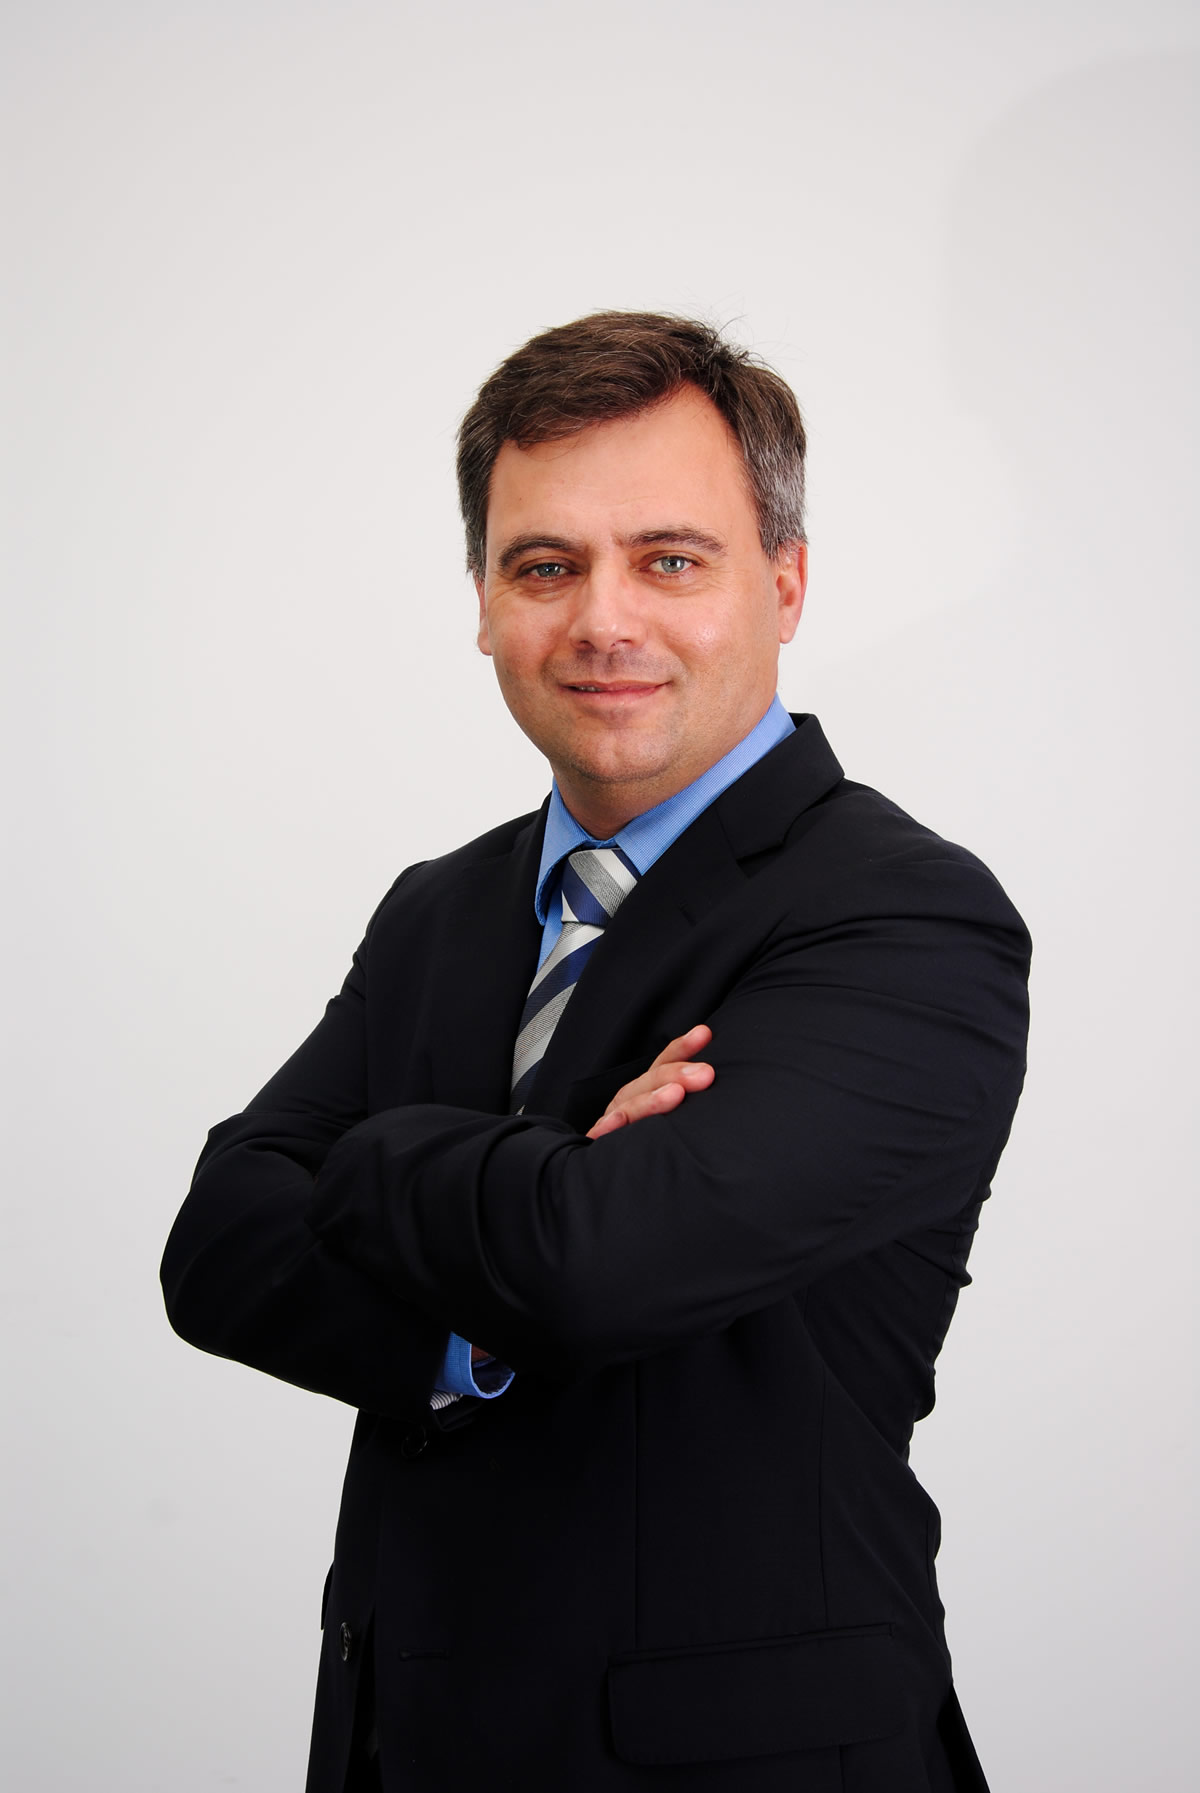 Ricardo Neto, President of Fluxos Association